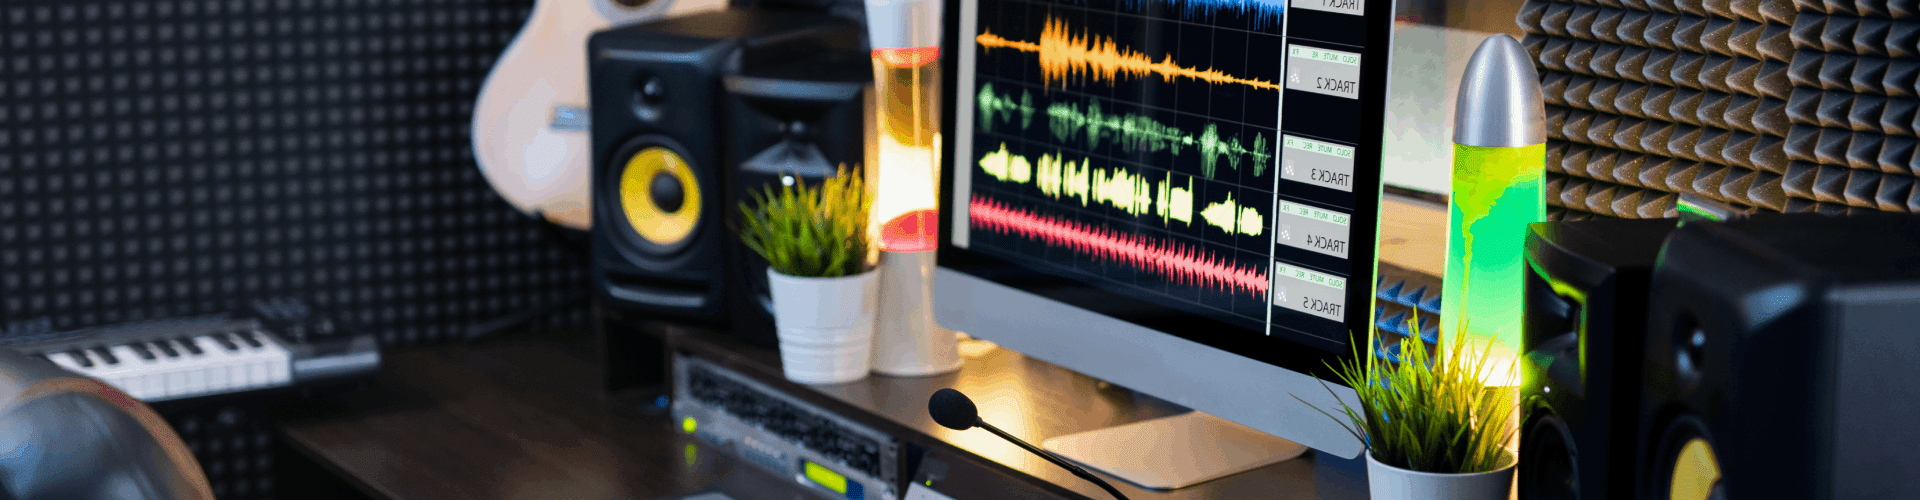 voice studio monitor and speakers